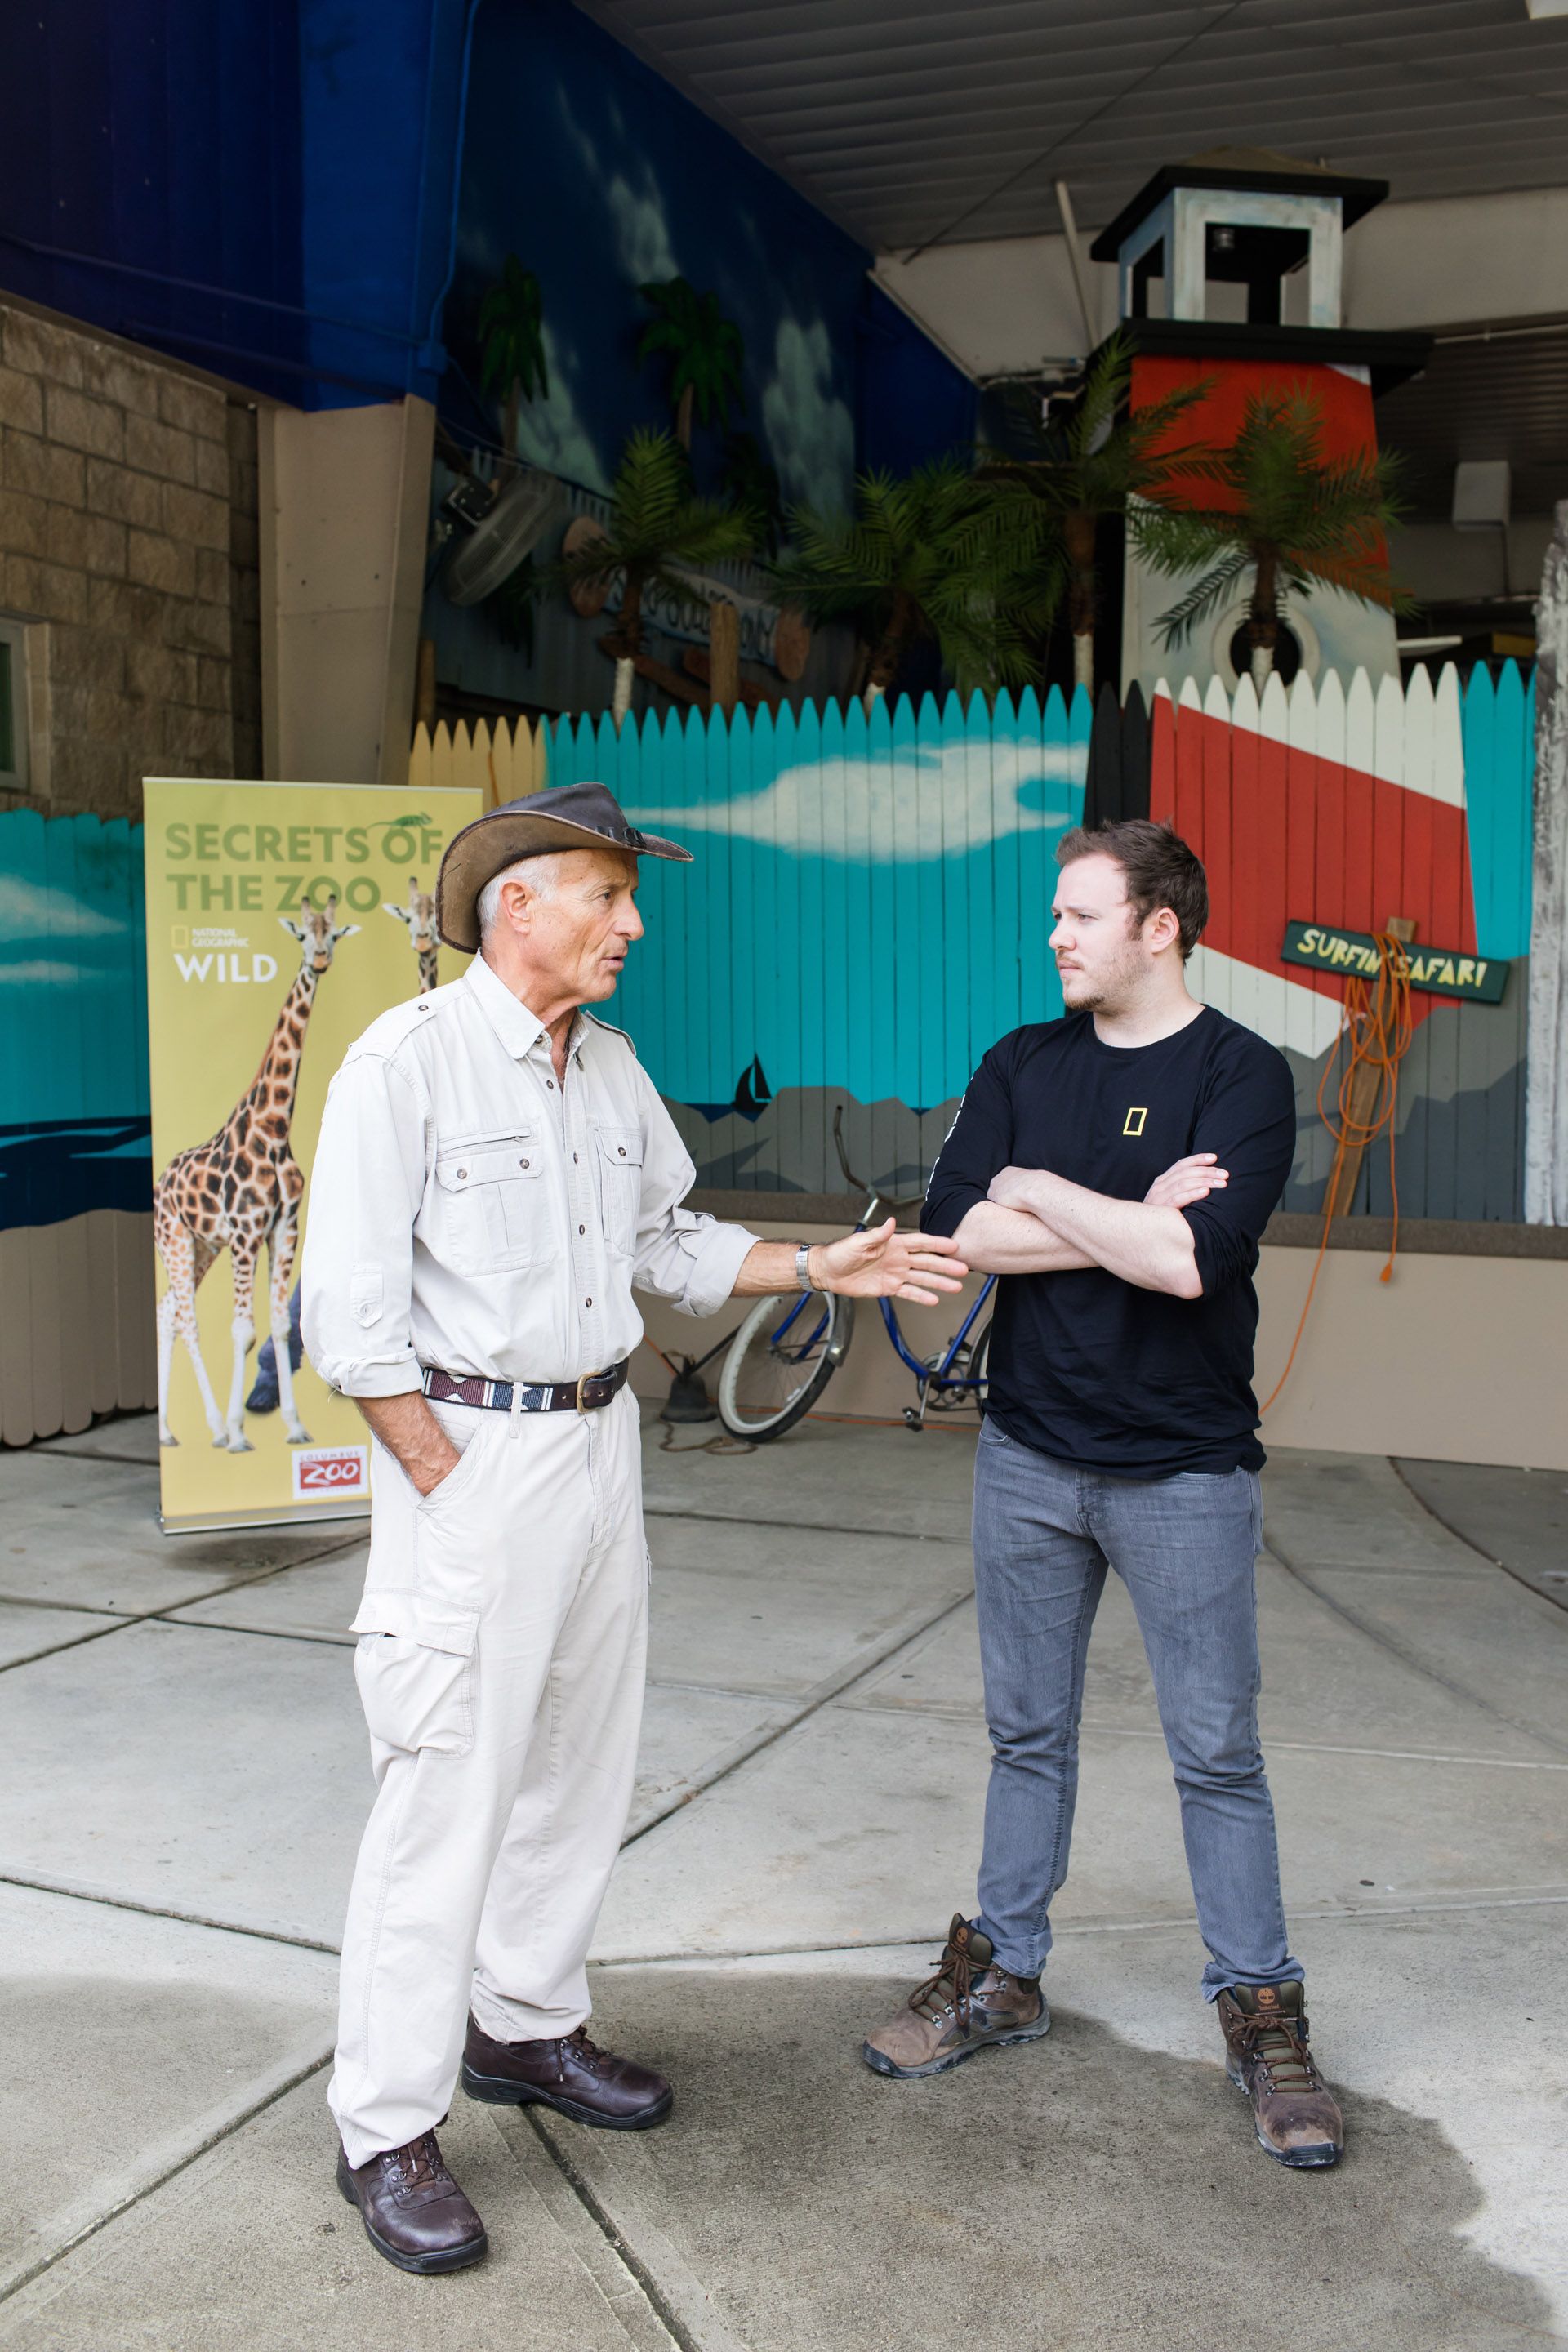 Secrets of the Zoo Season 2 Press Trip - Rob Keyes chats with Jack Hanna